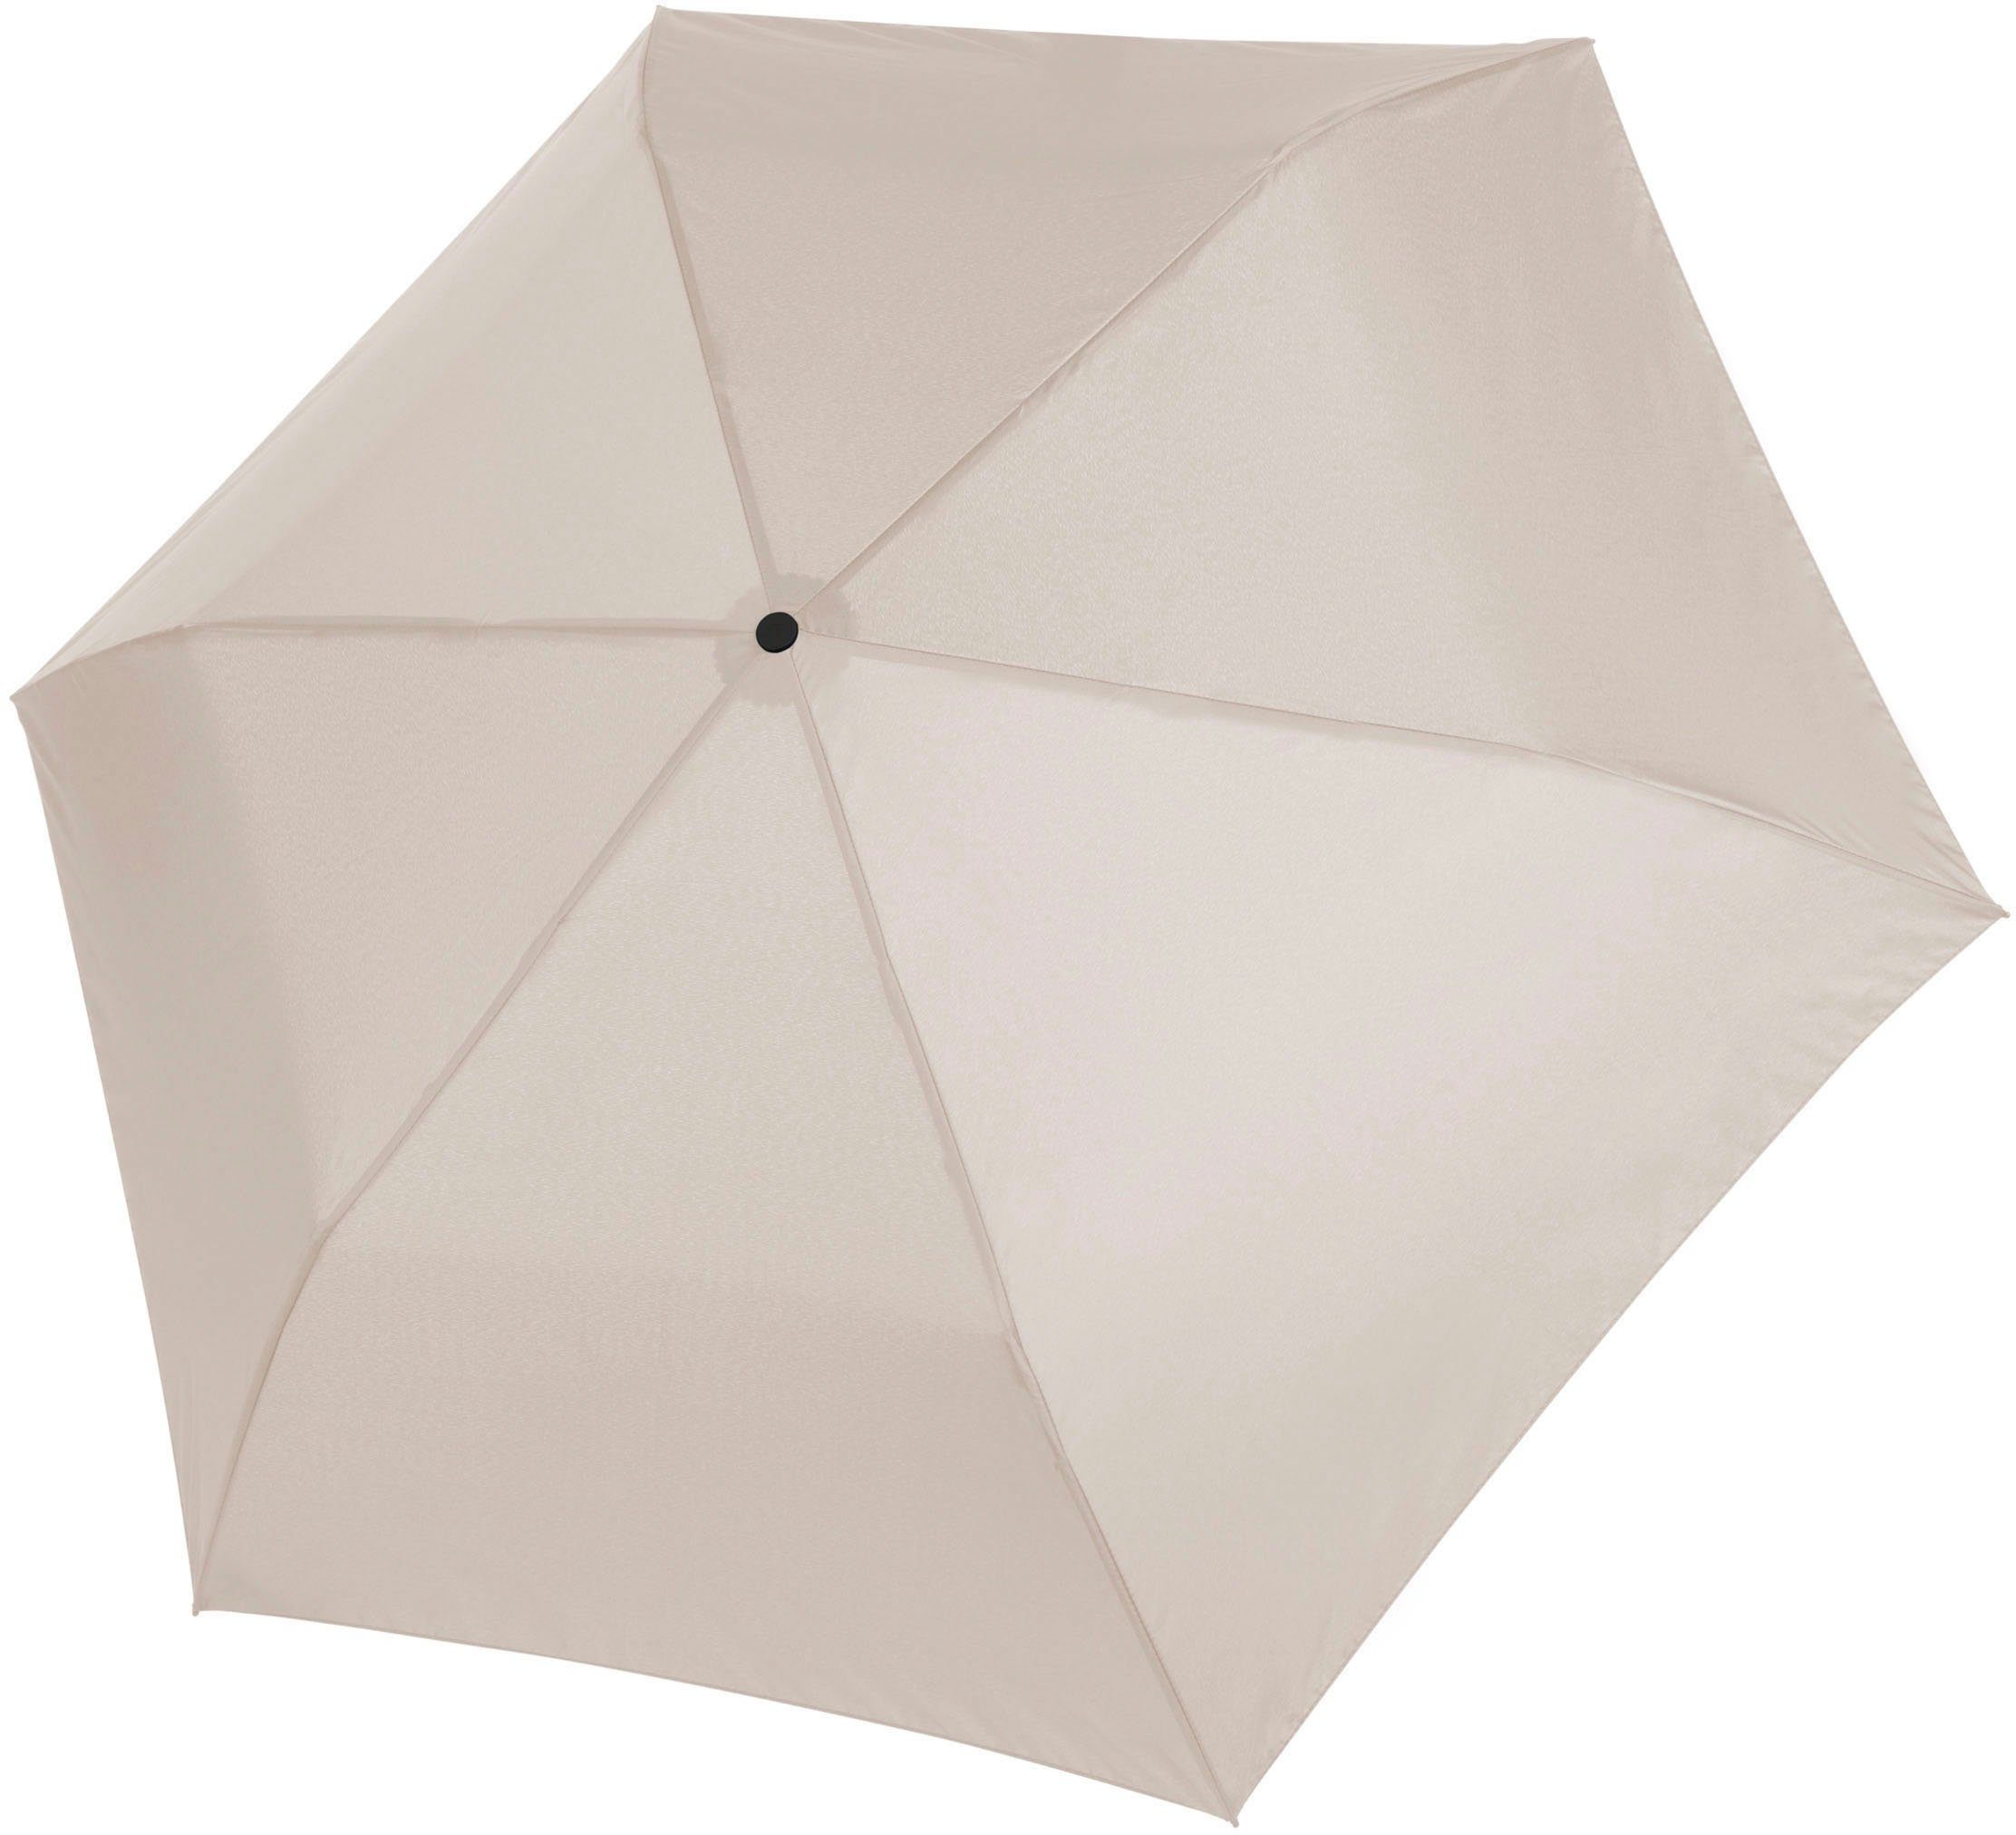 Taschenregenschirm beige uni, harmonic doppler® zero,99